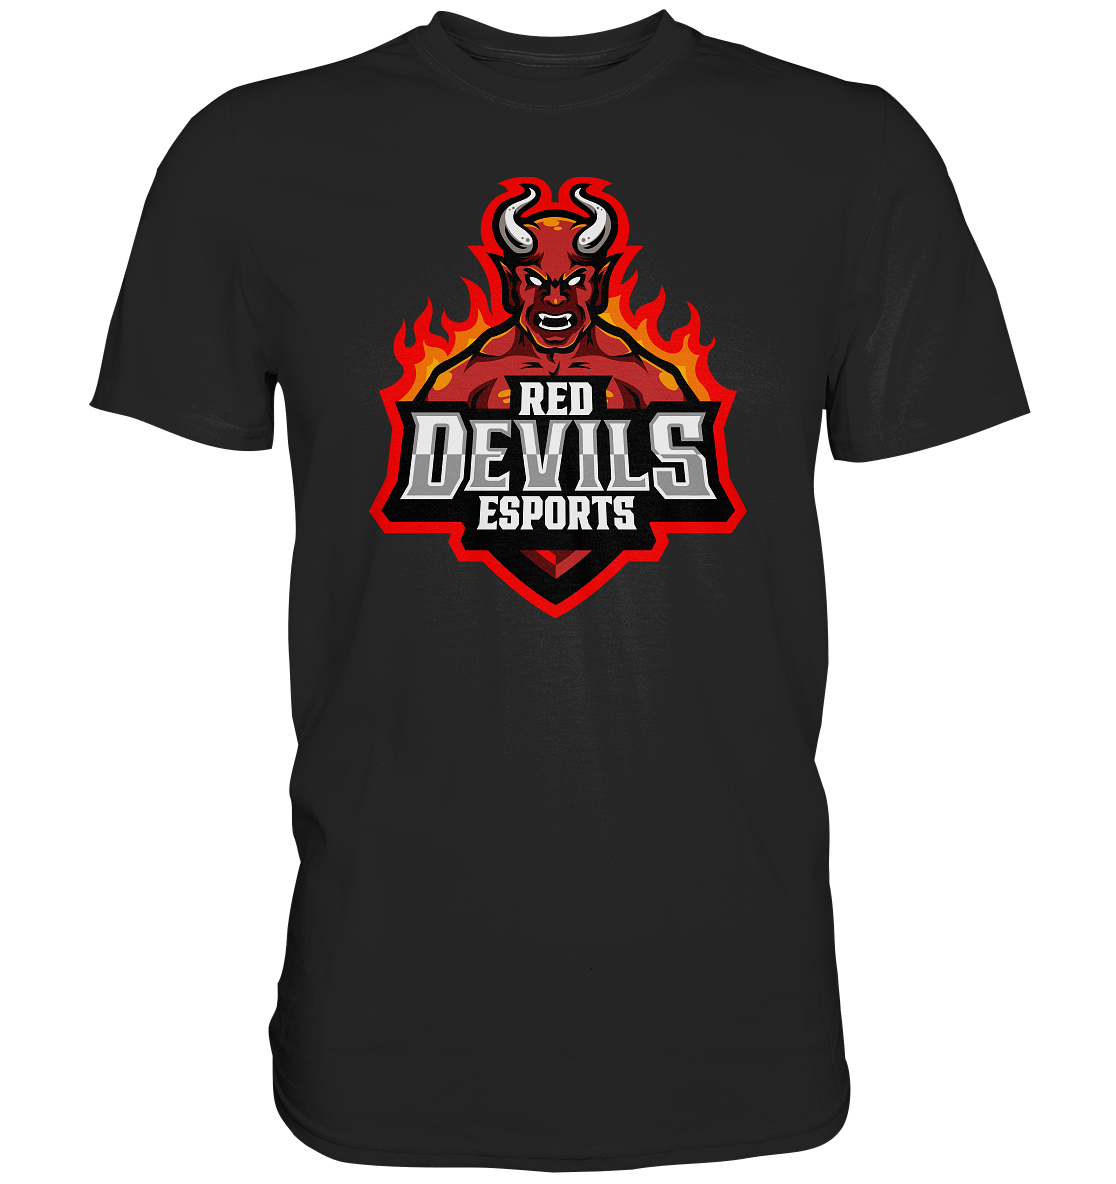 RED DEVILS ESPORTS - Basic Shirt